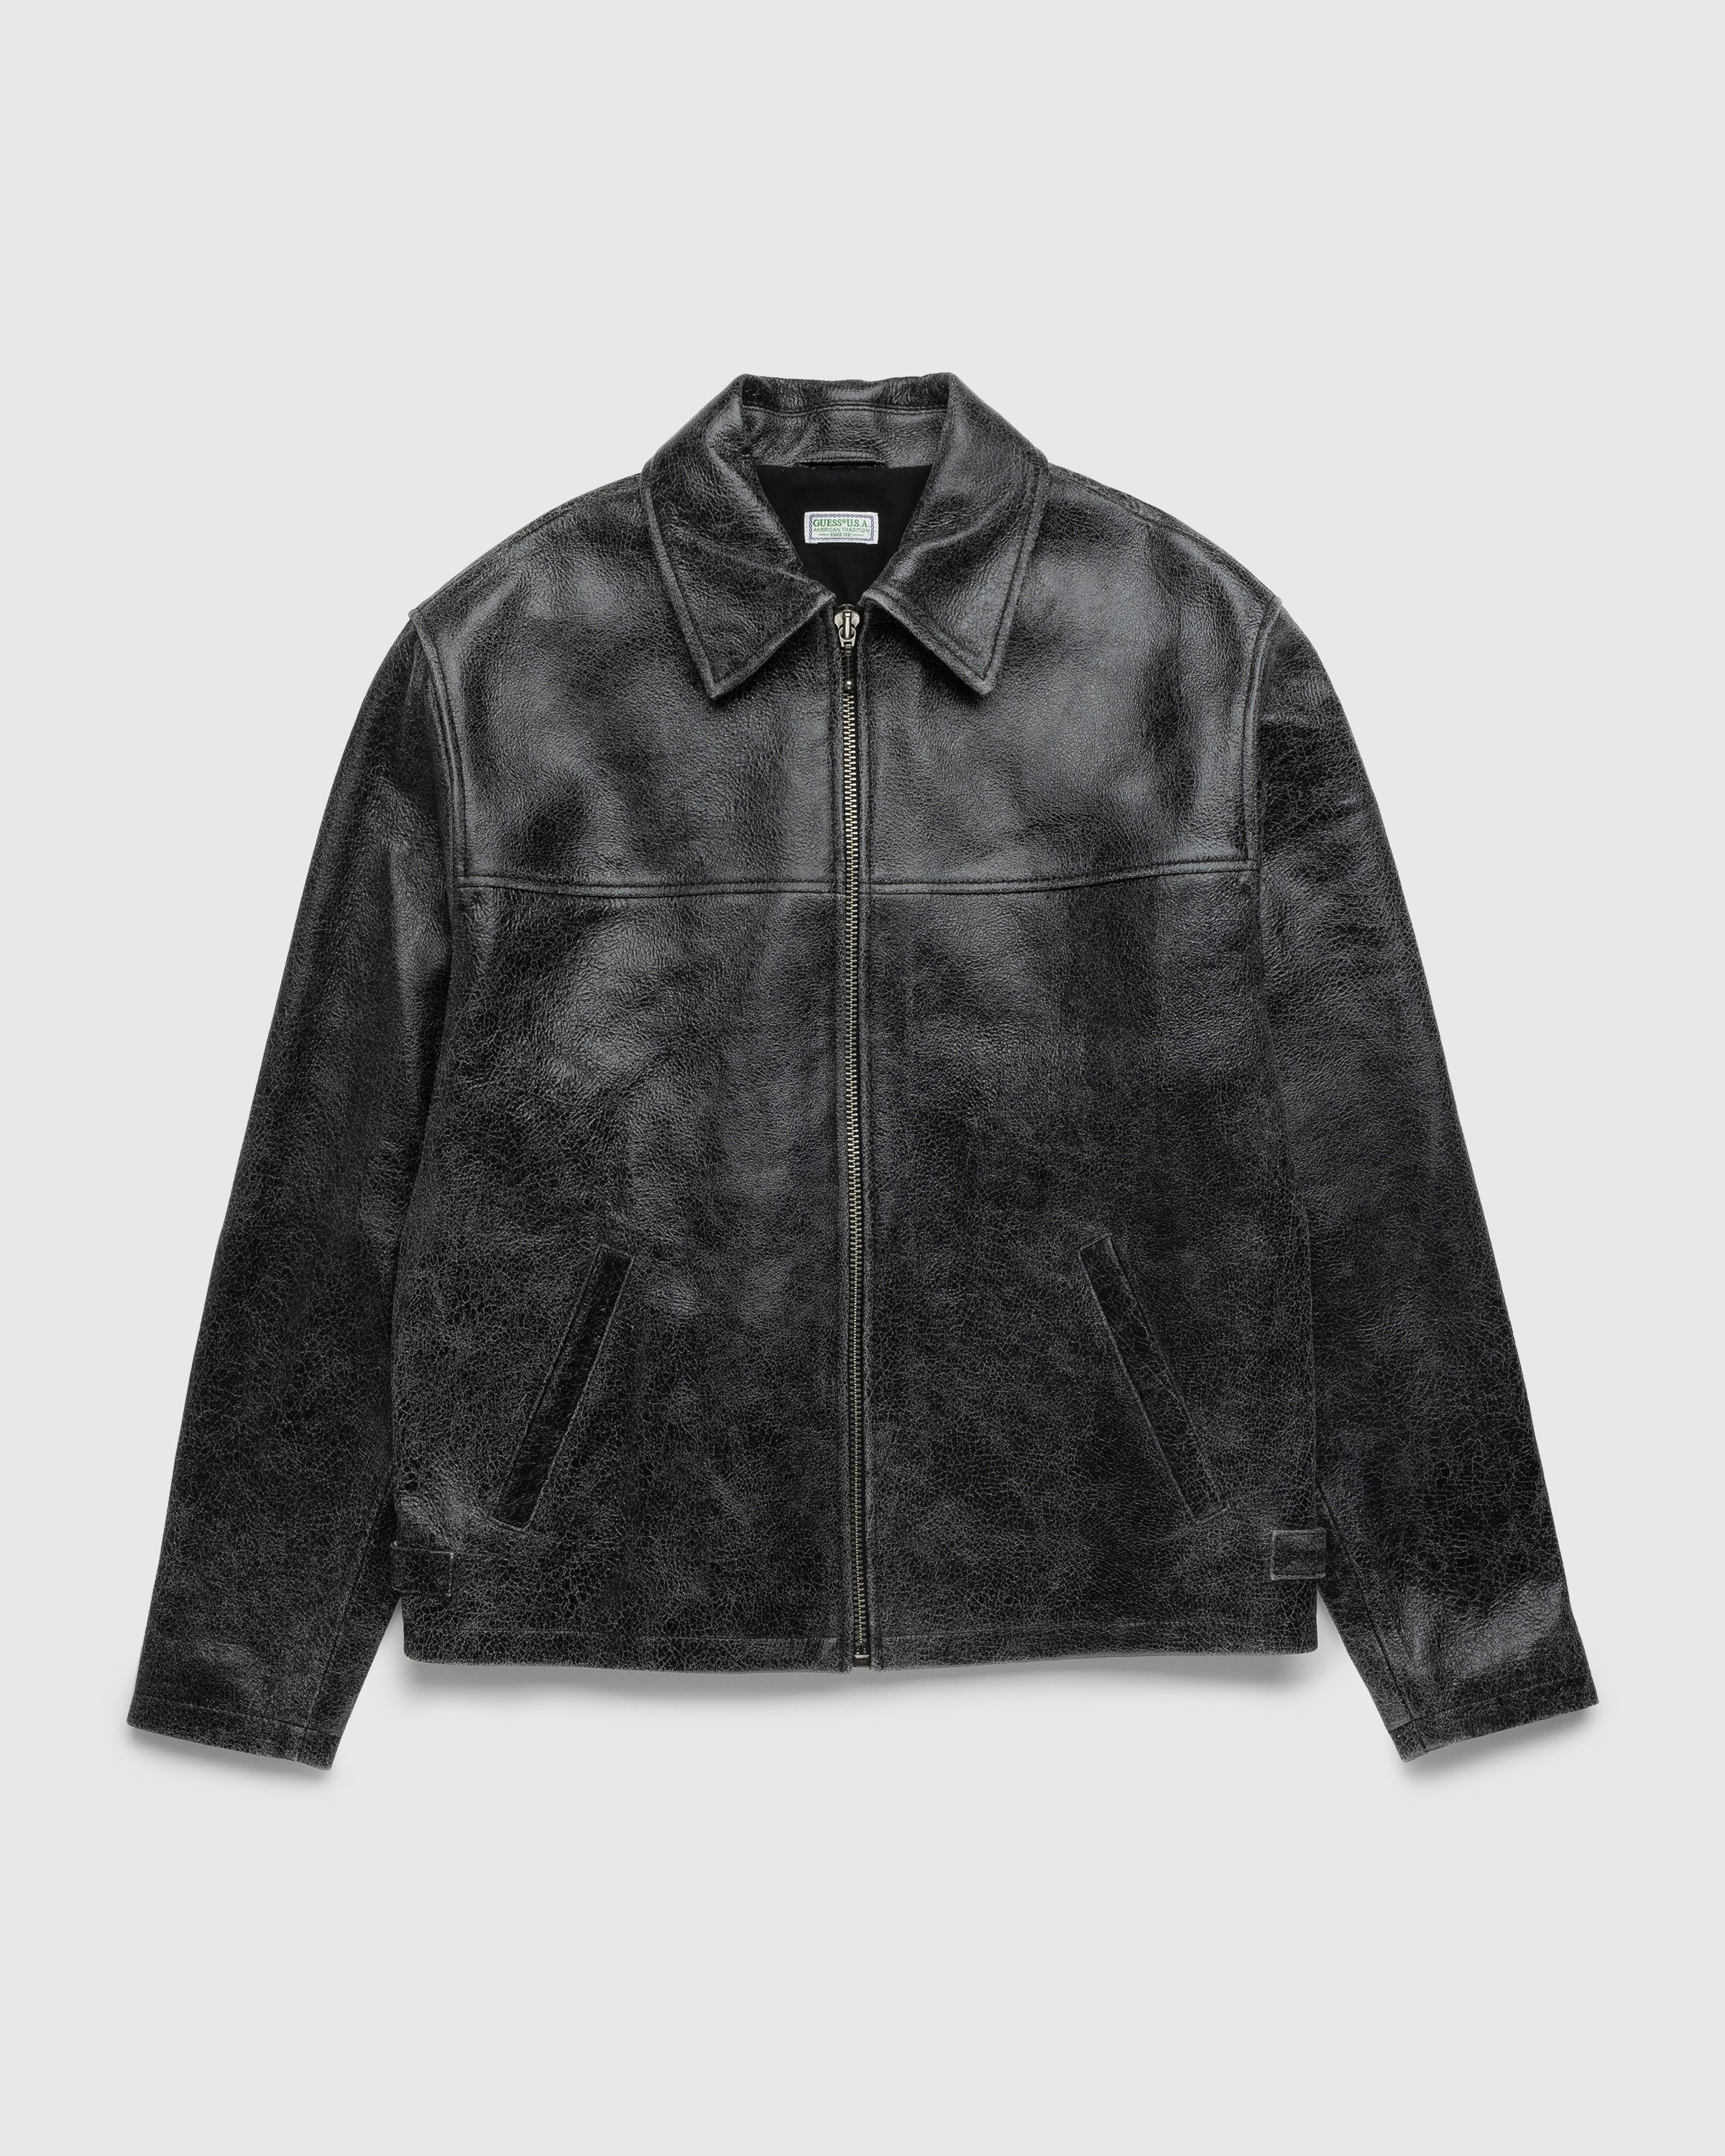 Guess USA - Crackle Leather Jacket Black - Clothing - Black - Image 1